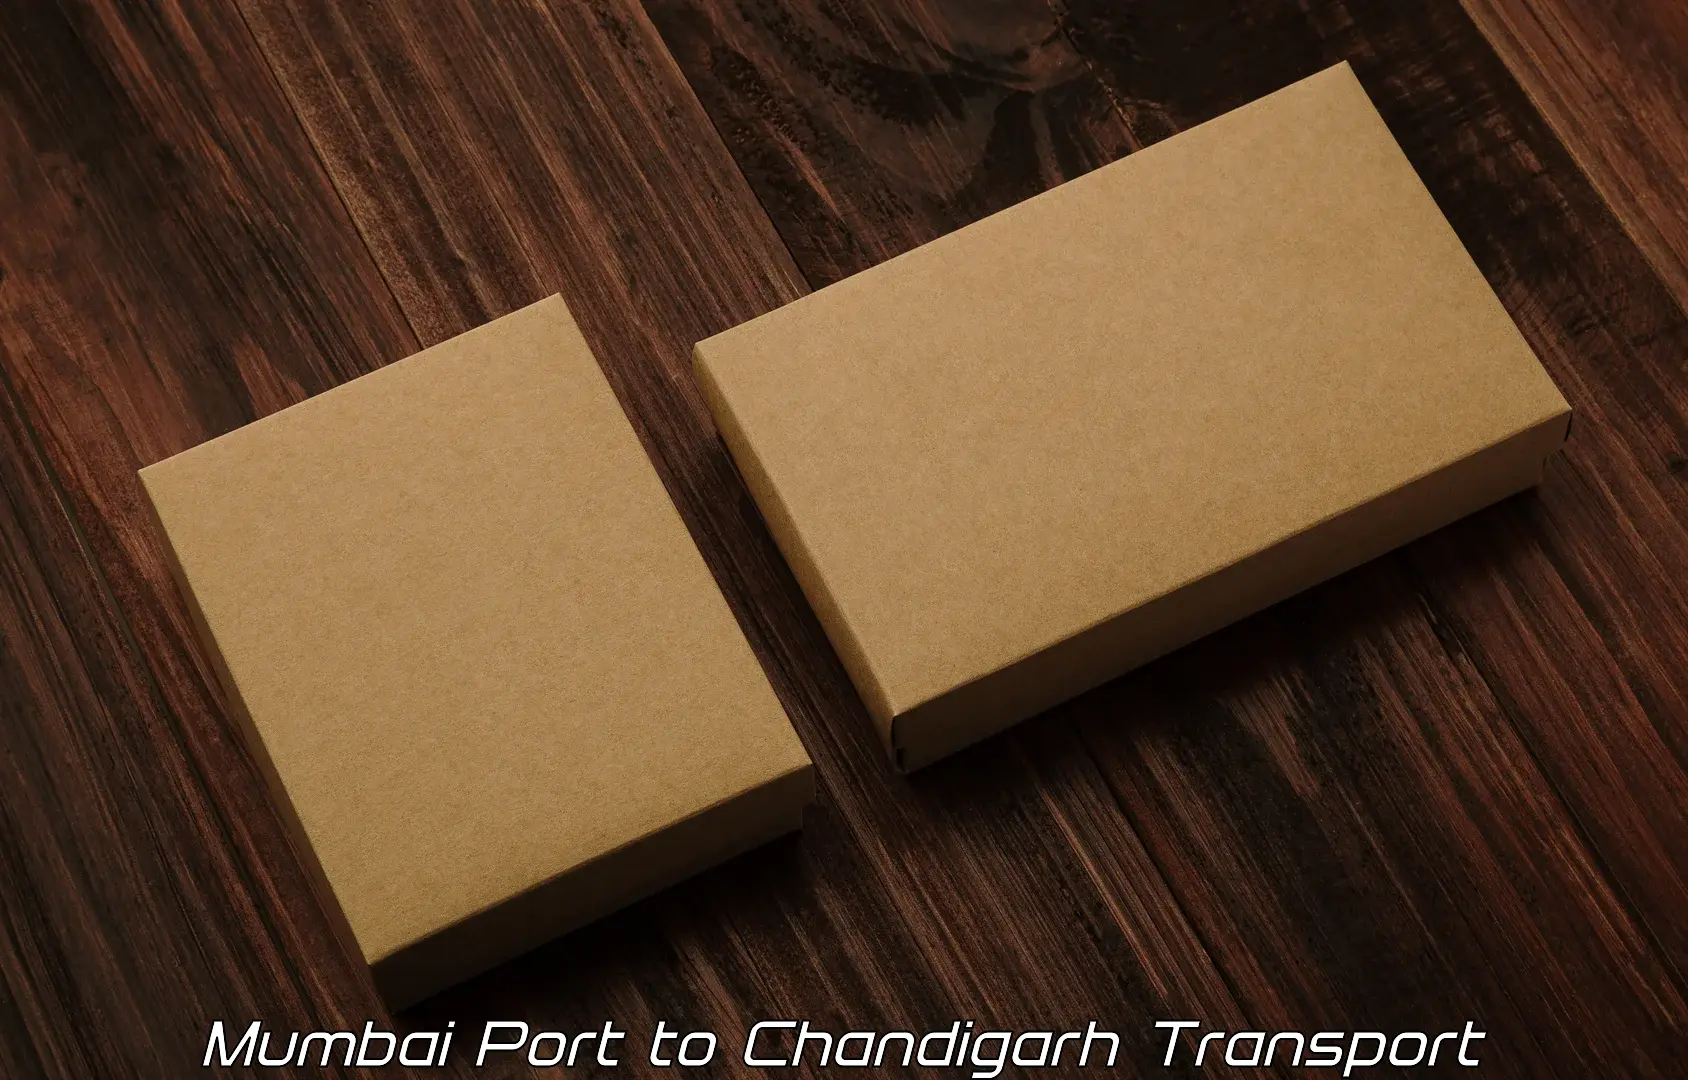 Vehicle transport services Mumbai Port to Chandigarh